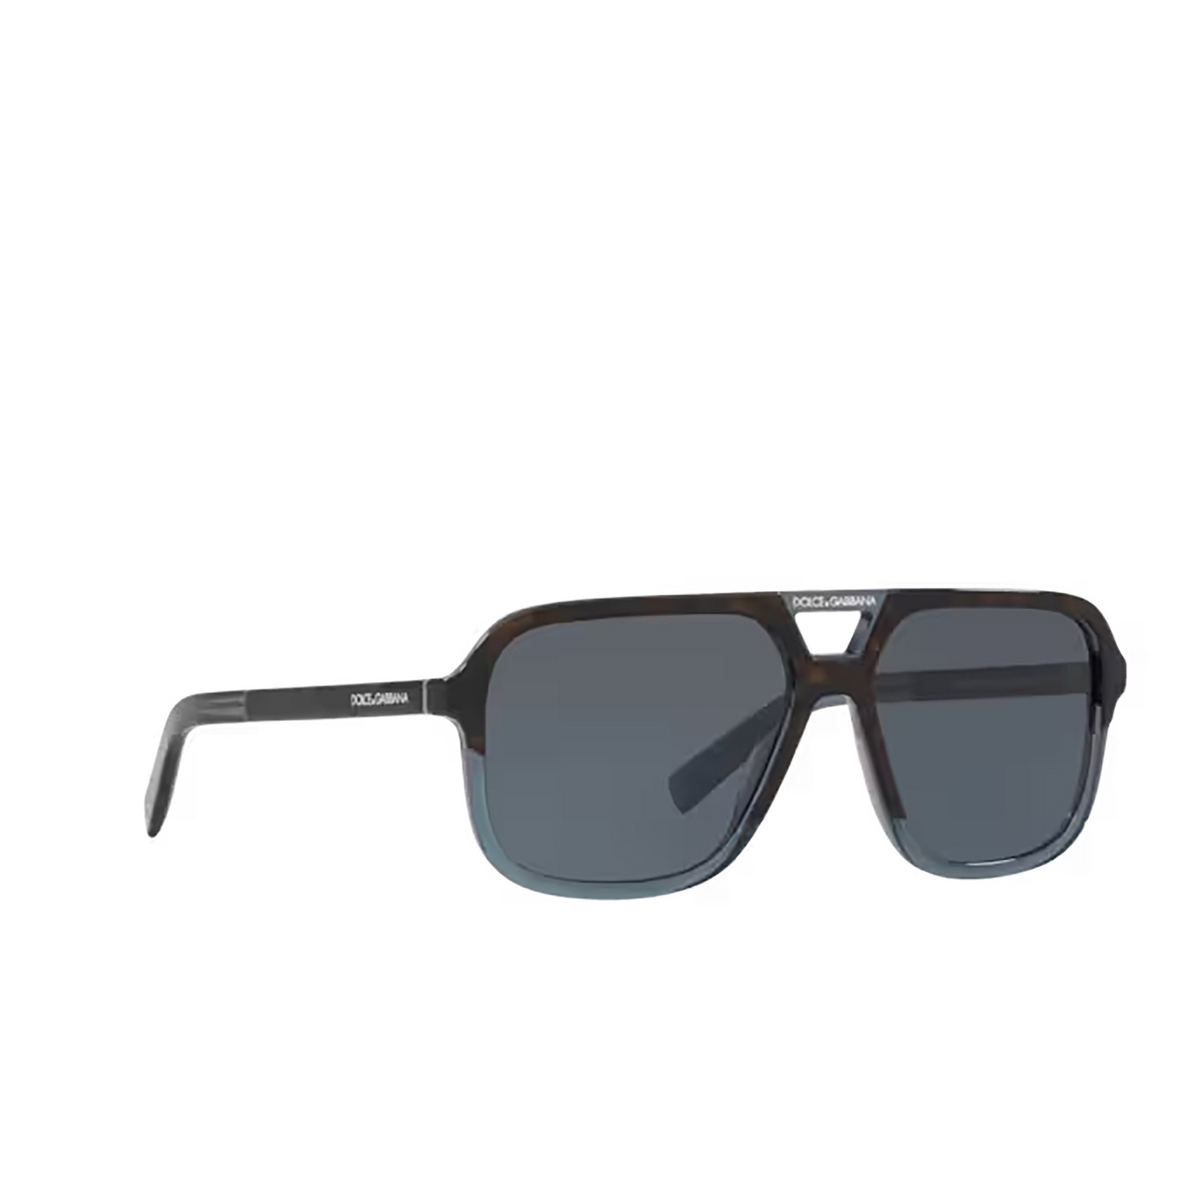 Dolce & Gabbana DG4354 Sunglasses 320980 Havana transparent blue - three-quarters view